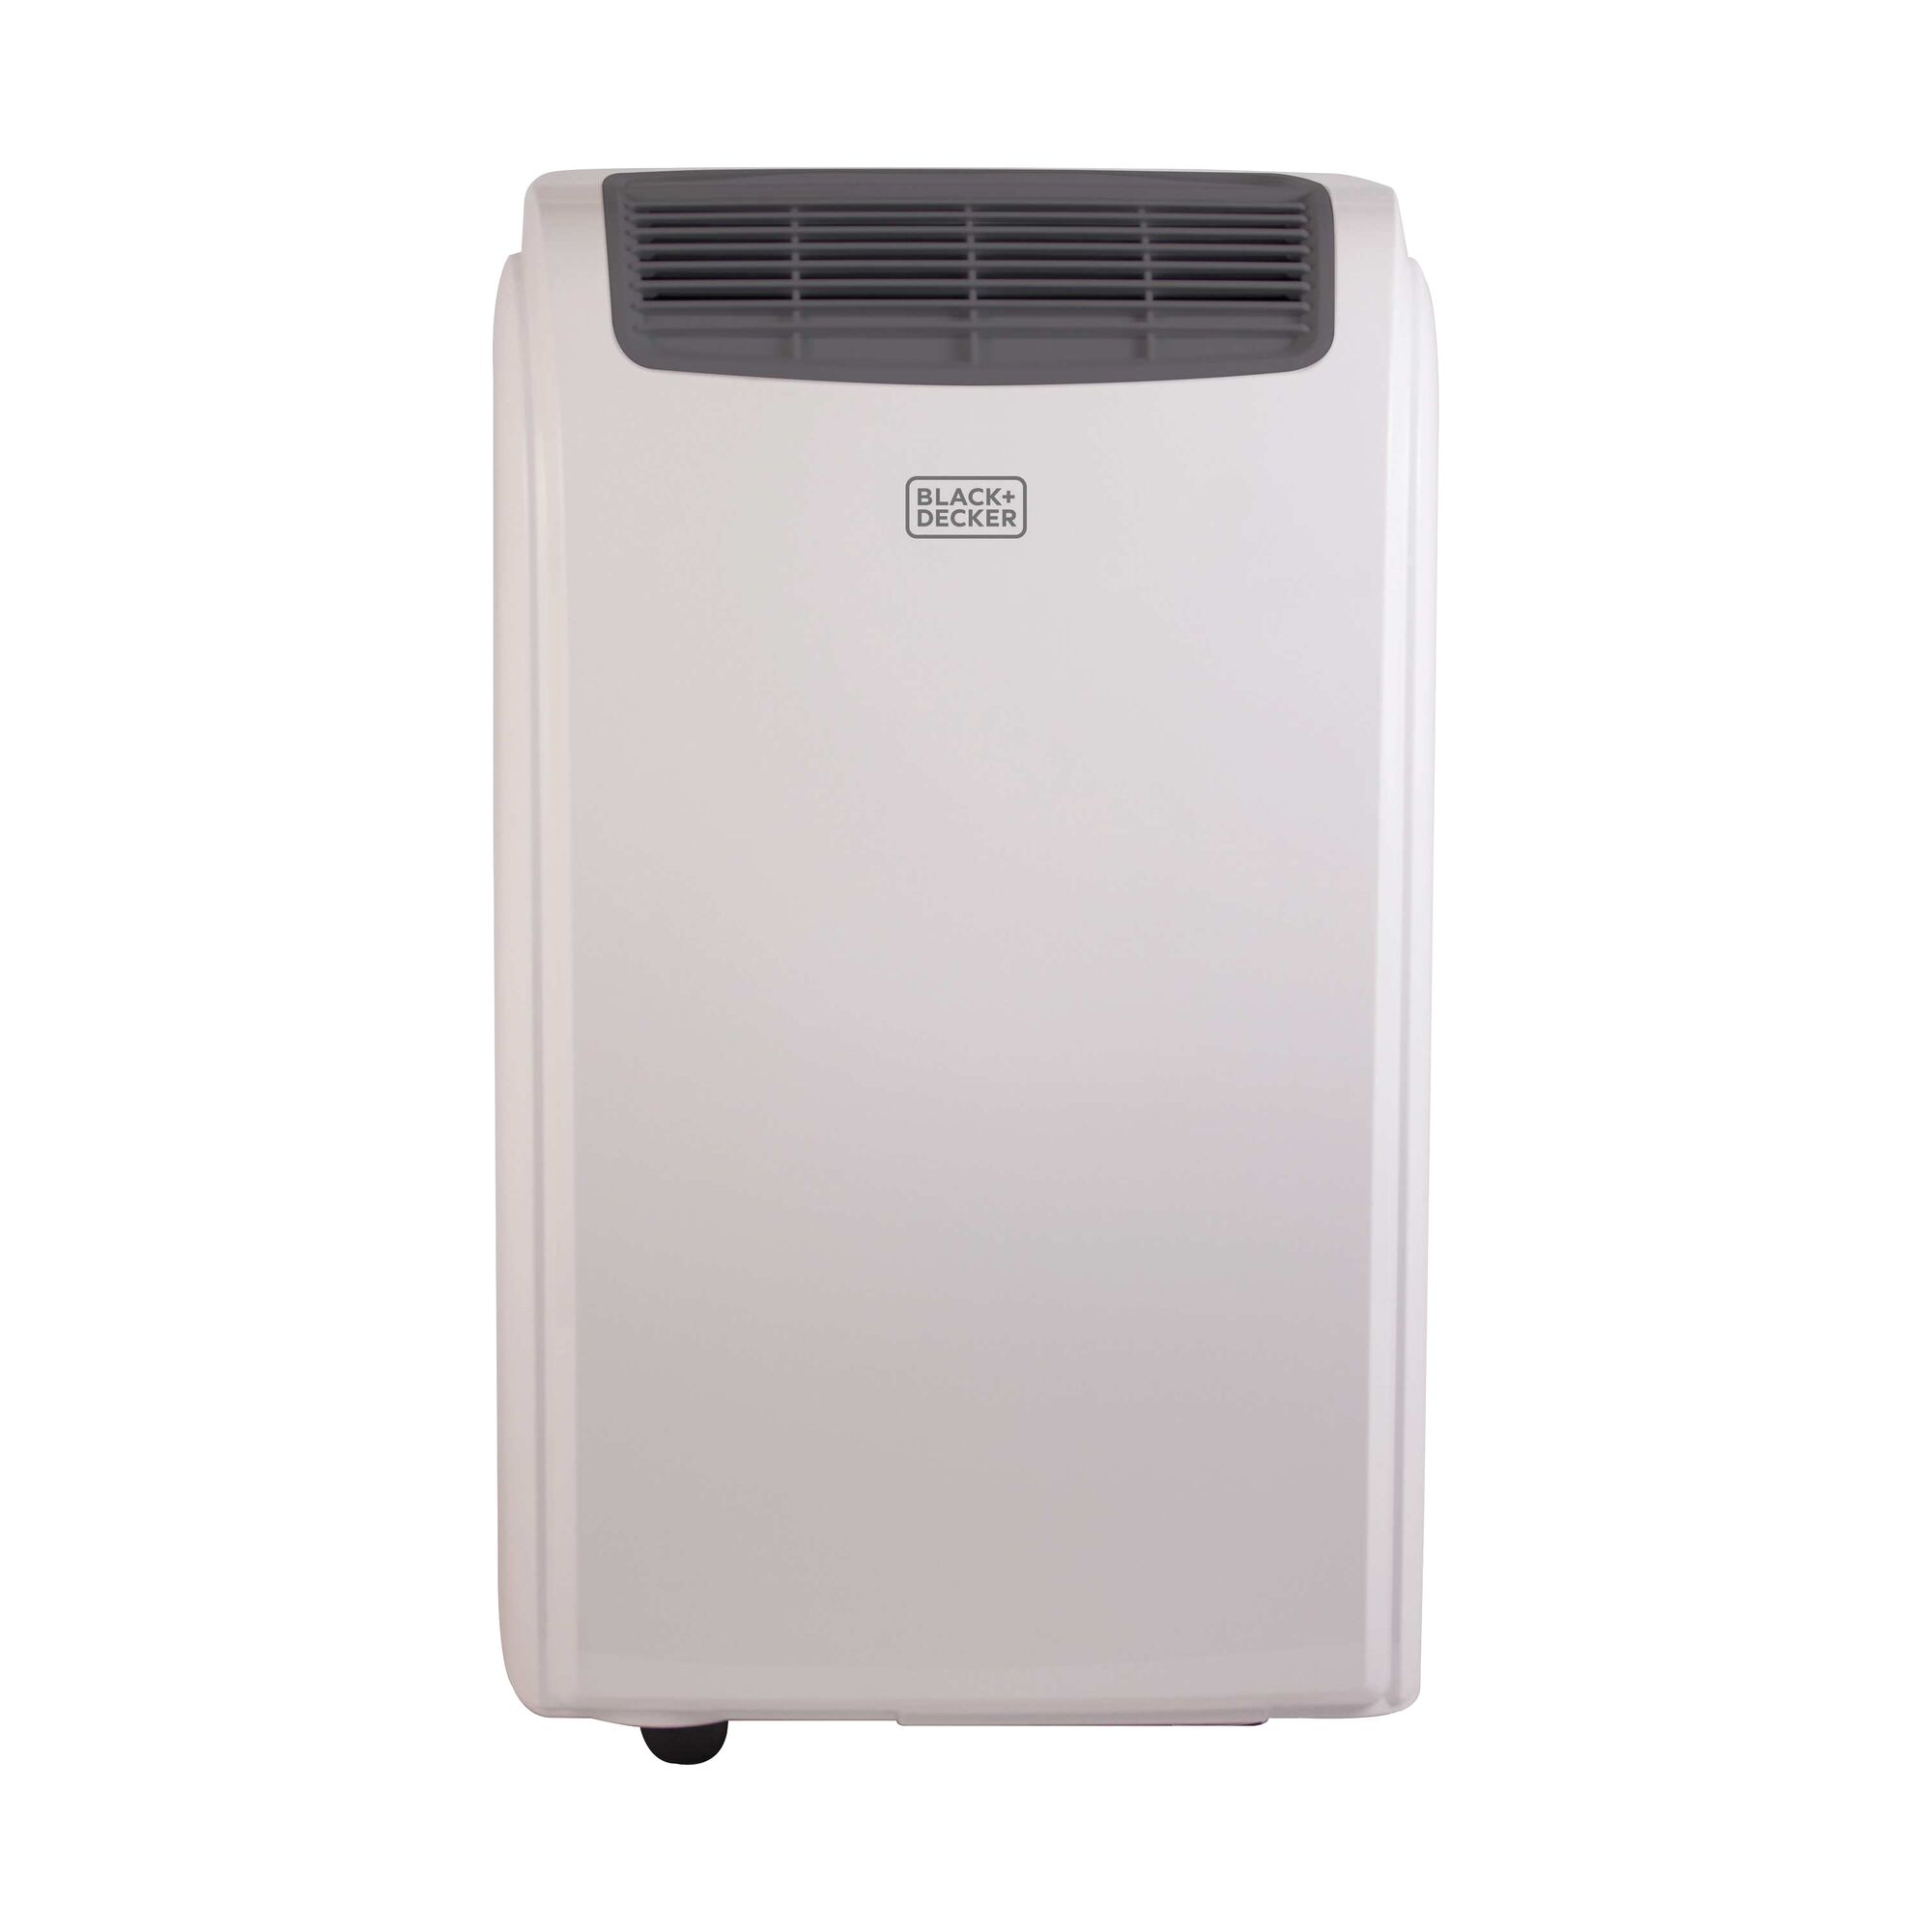 4000 B T U Portable Air Conditioner with Remote Control.